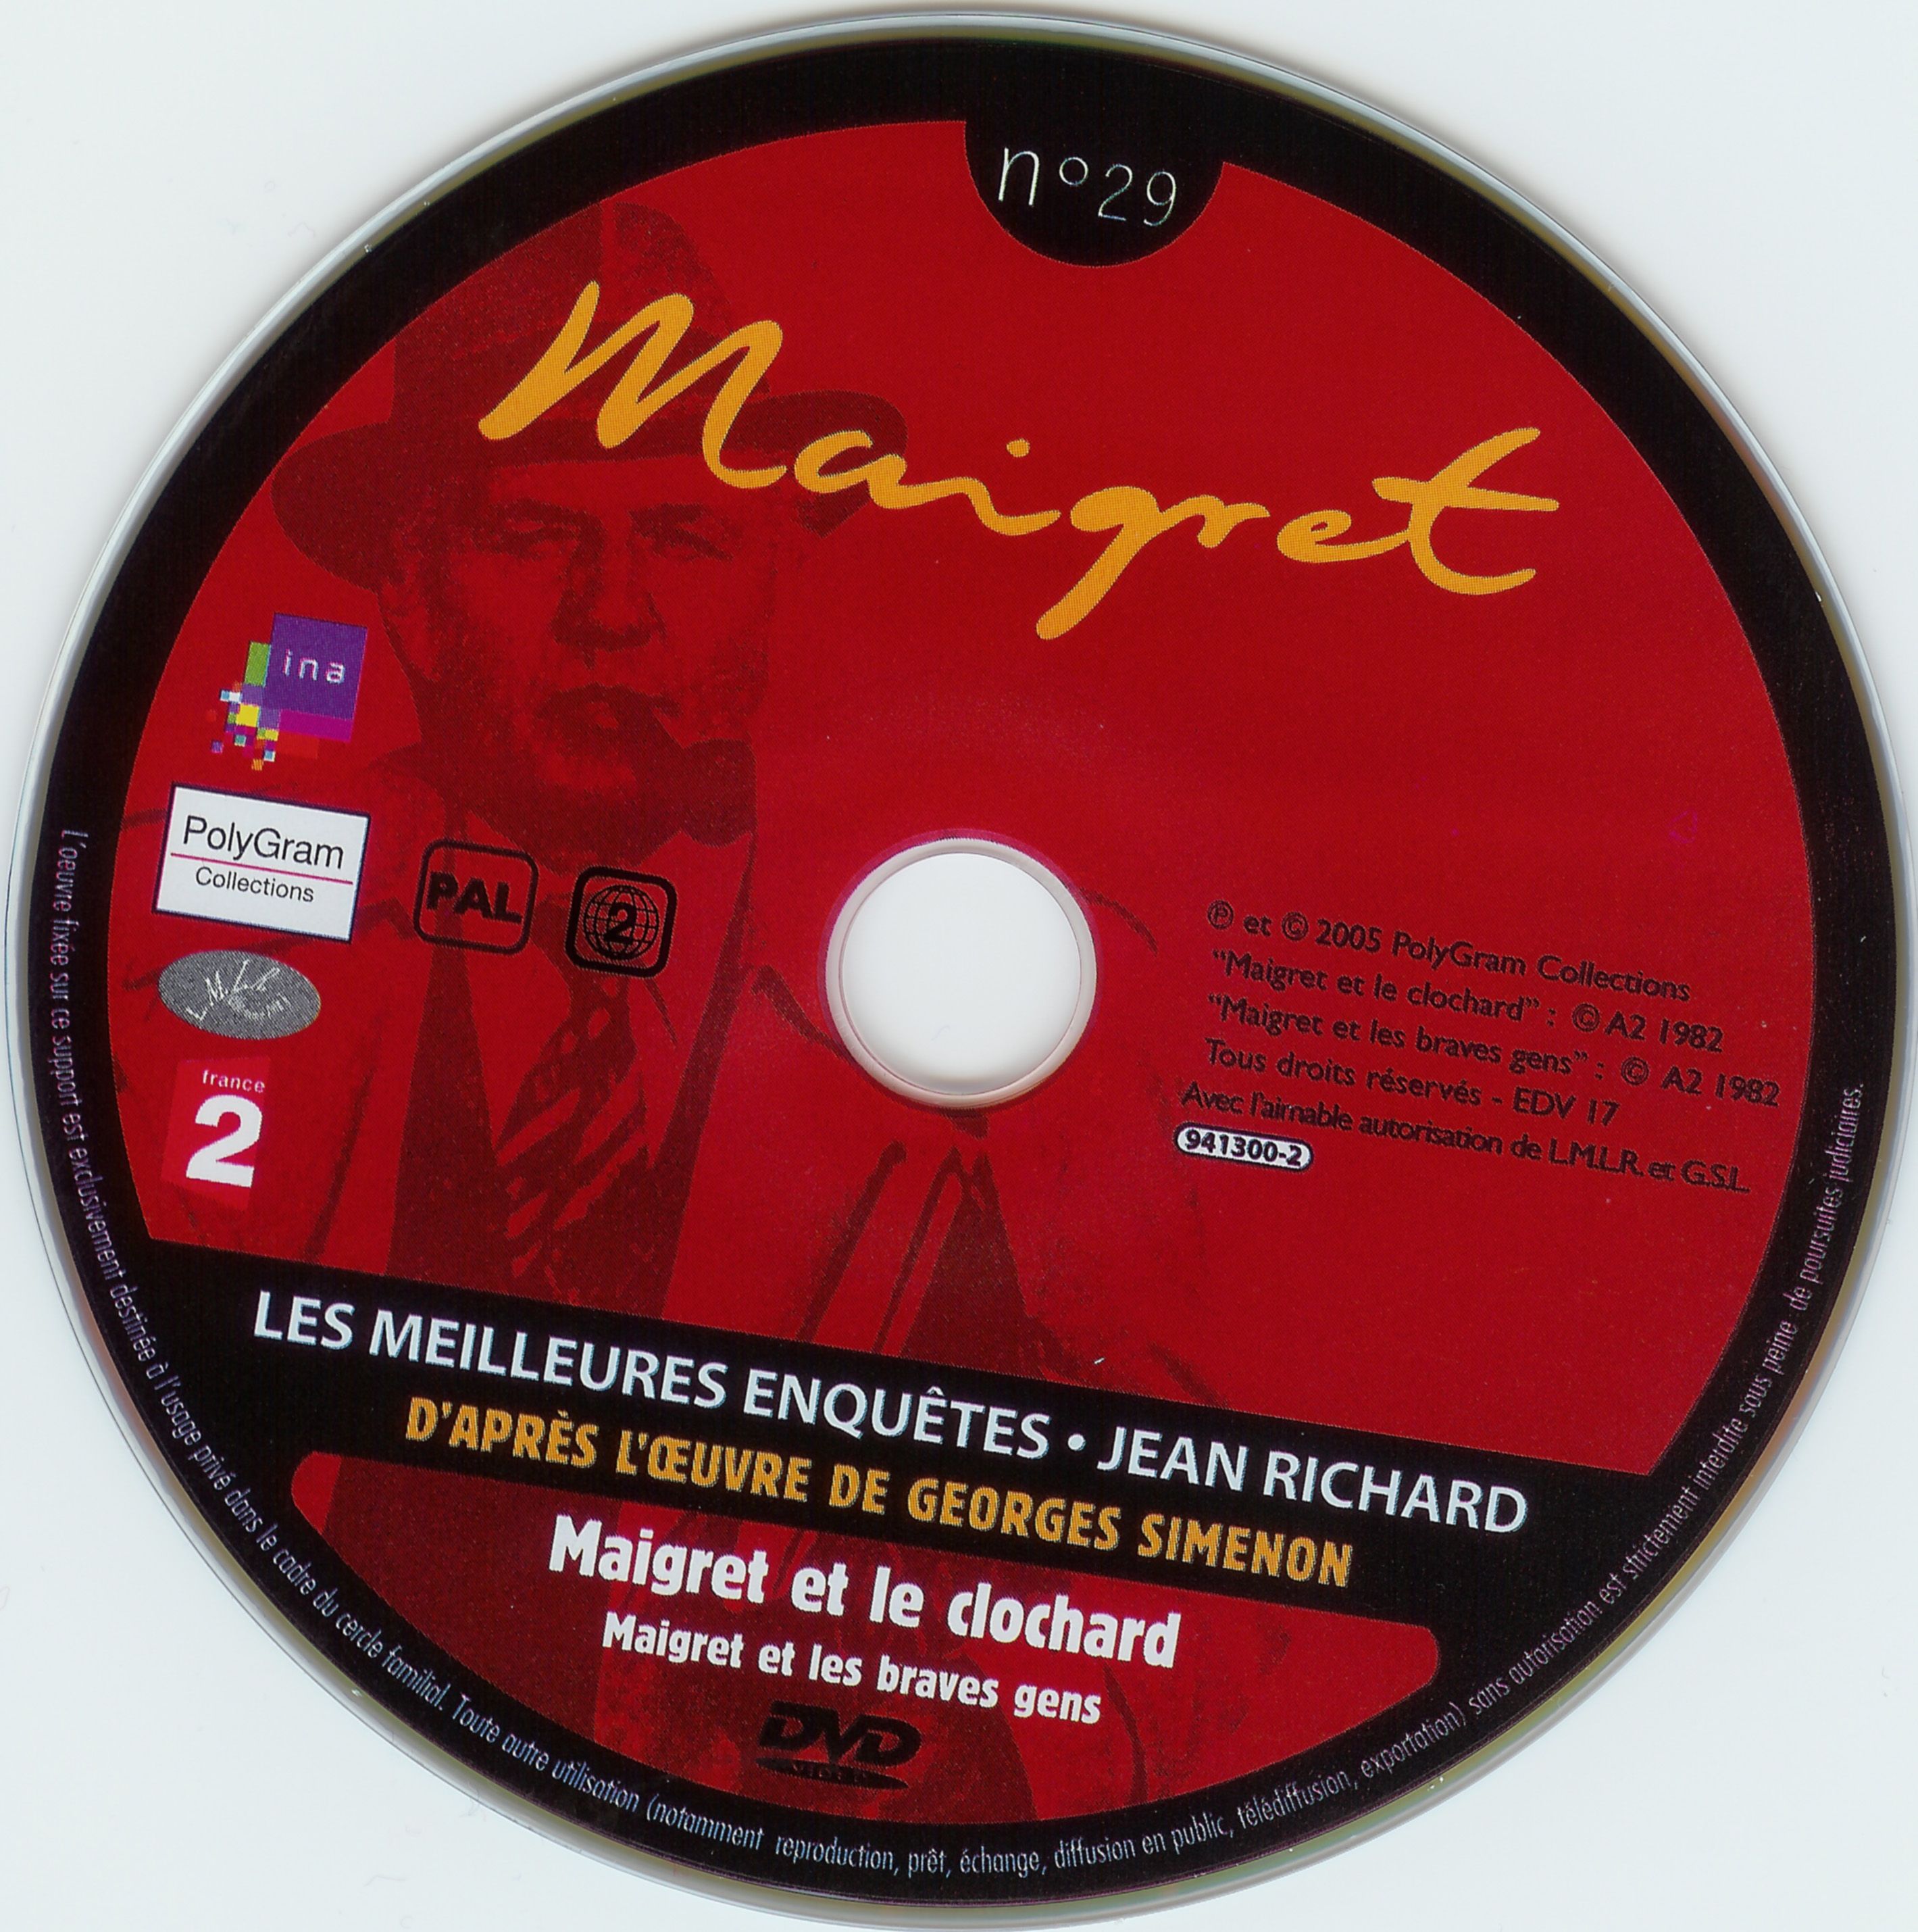 Maigret (Jean Richard) vol 29